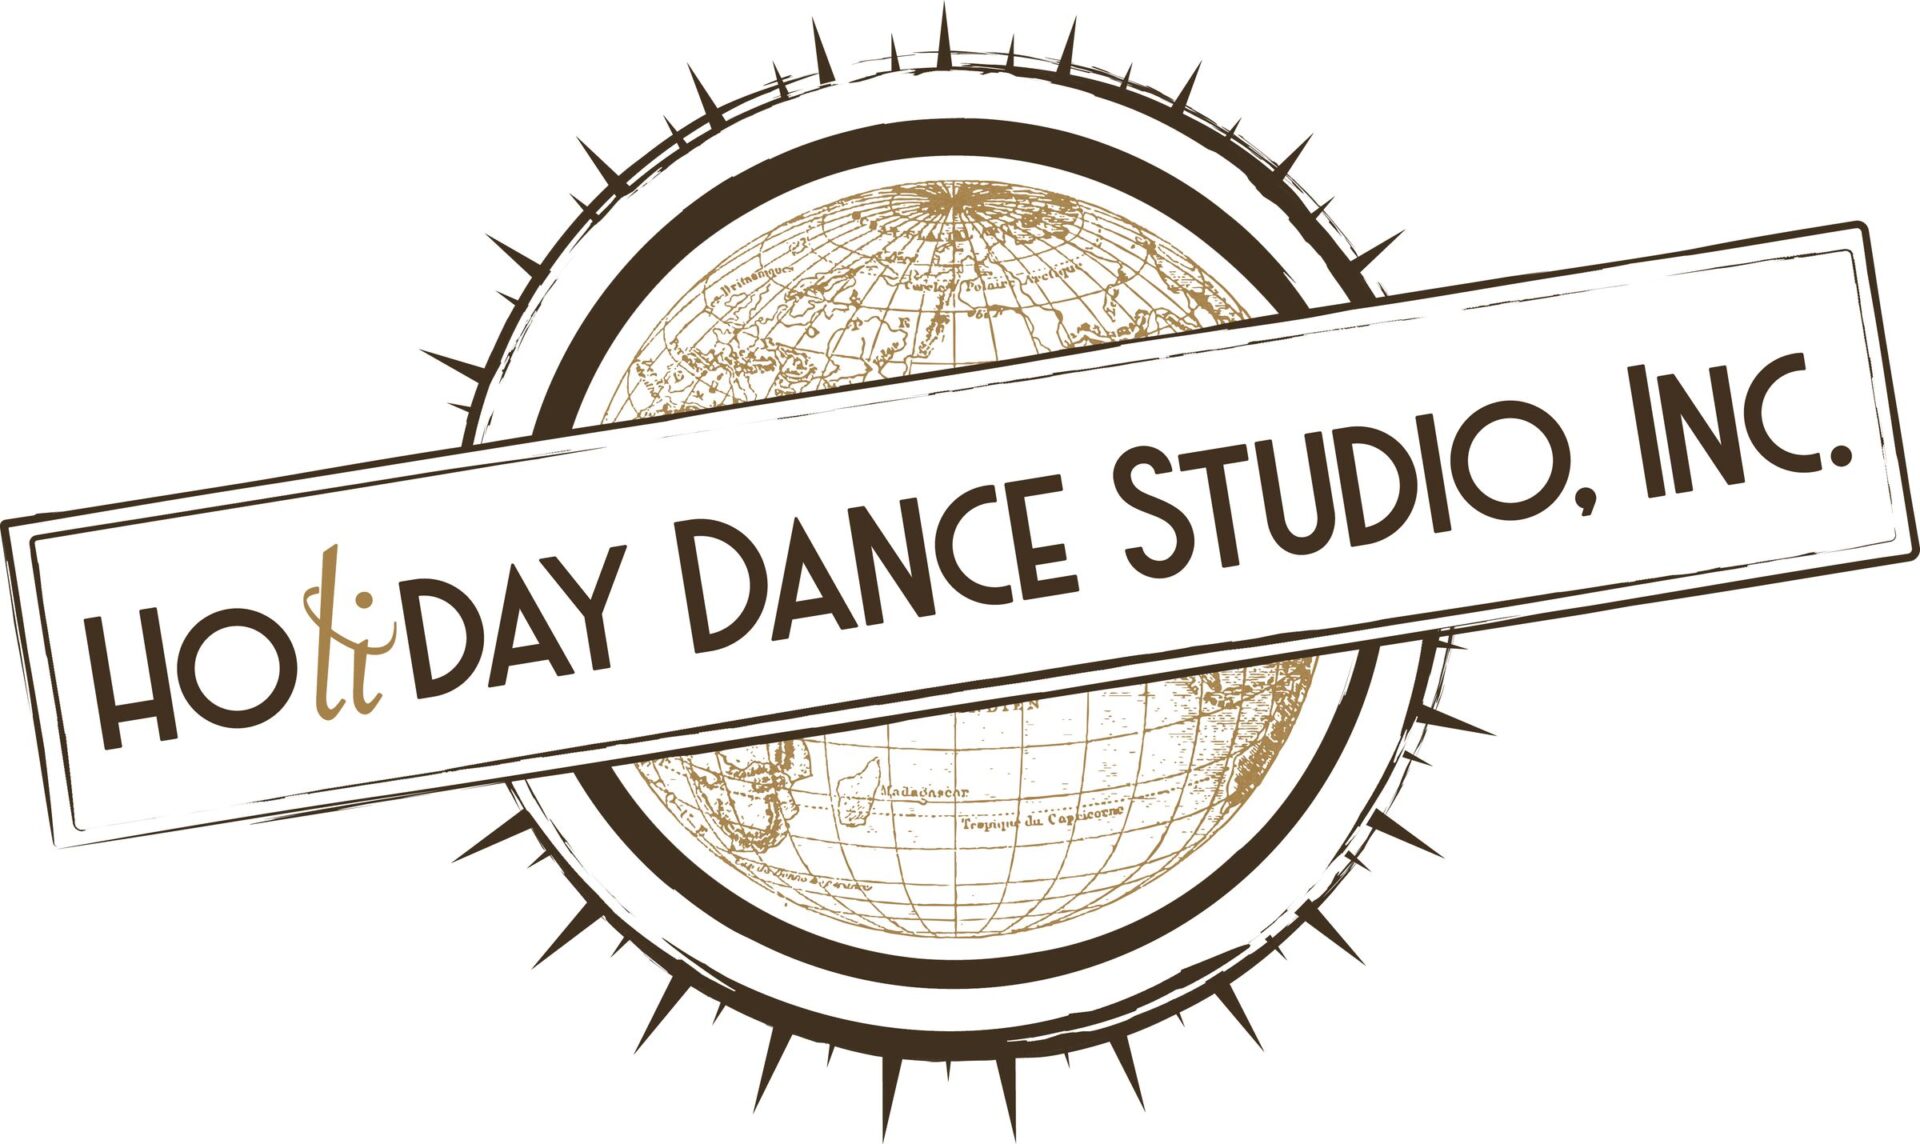 Holiday Dance Studio, Inc.